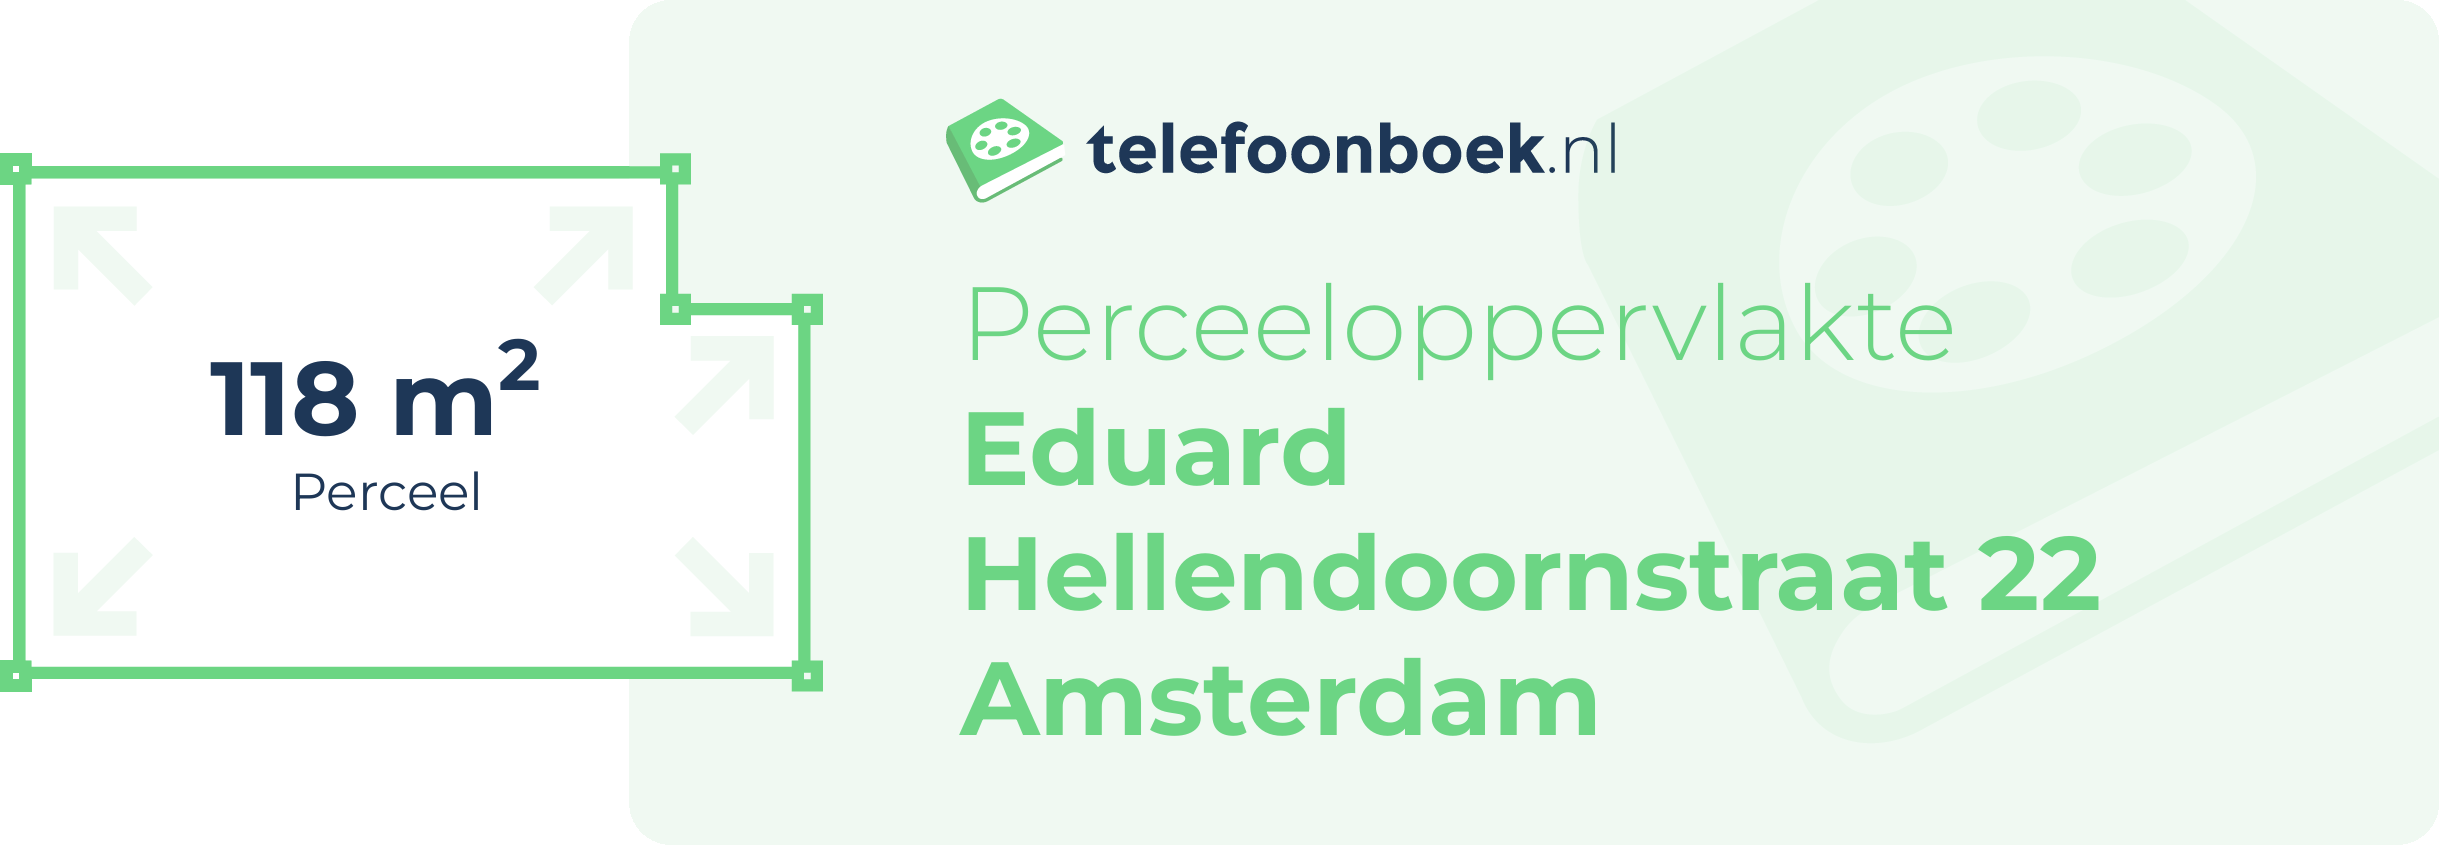 Perceeloppervlakte Eduard Hellendoornstraat 22 Amsterdam